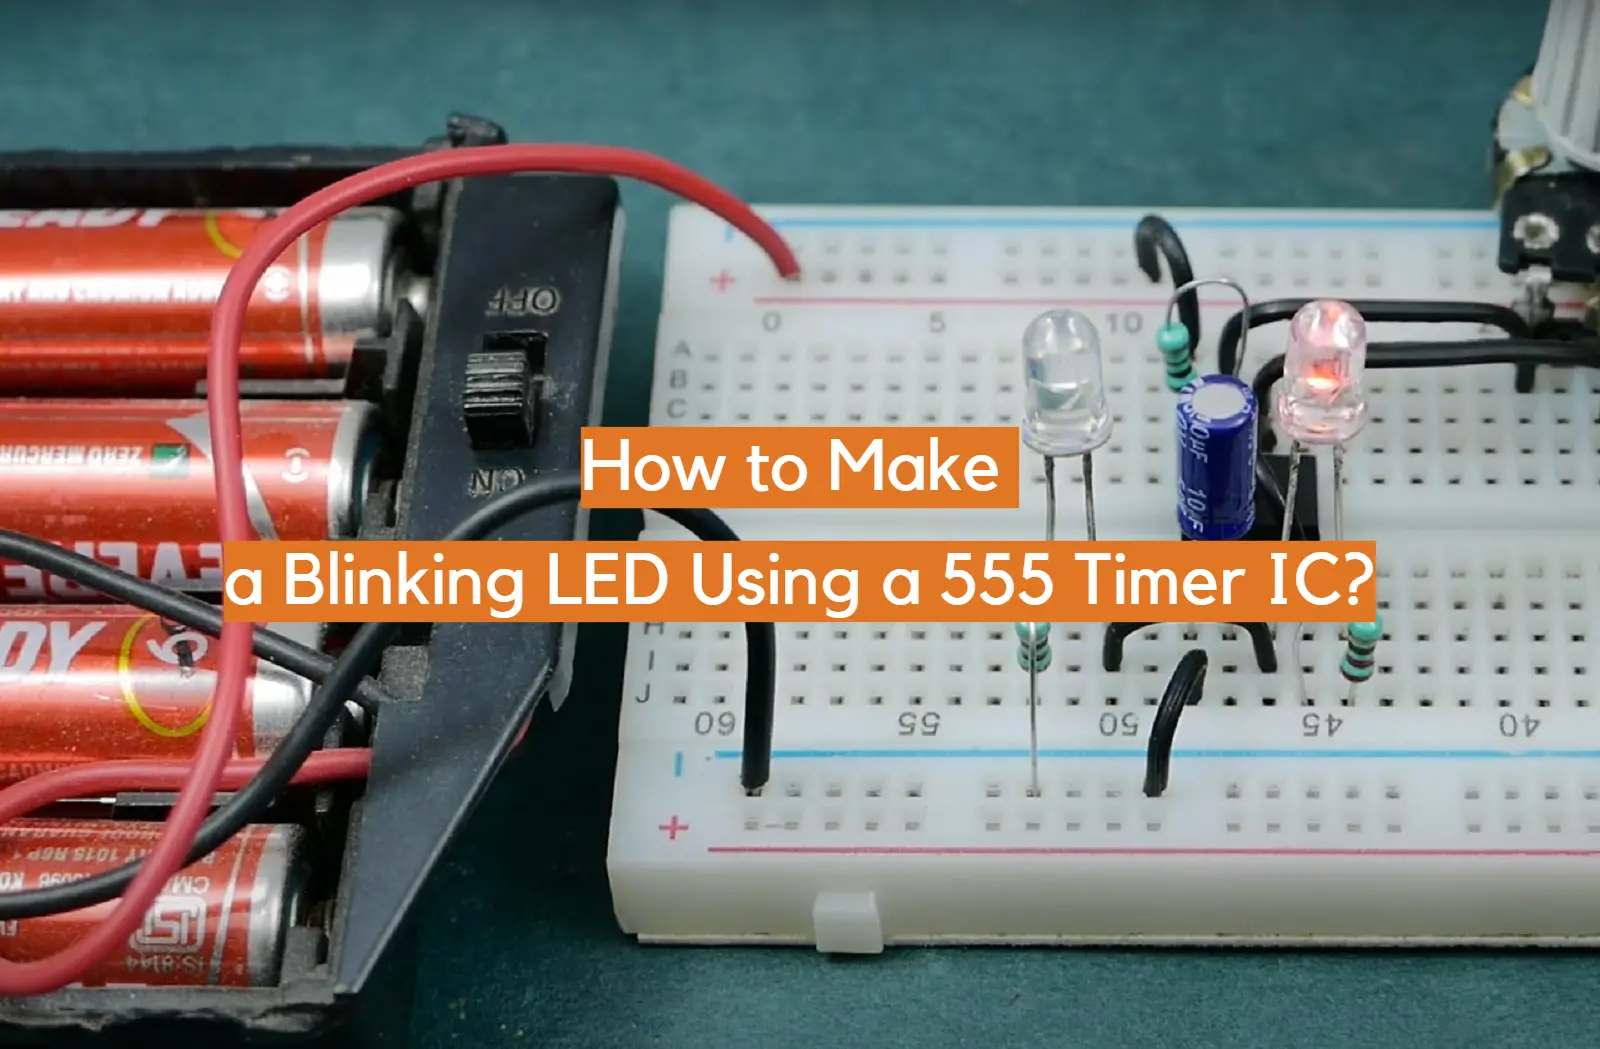 Blinking Two LED - JavaTpoint